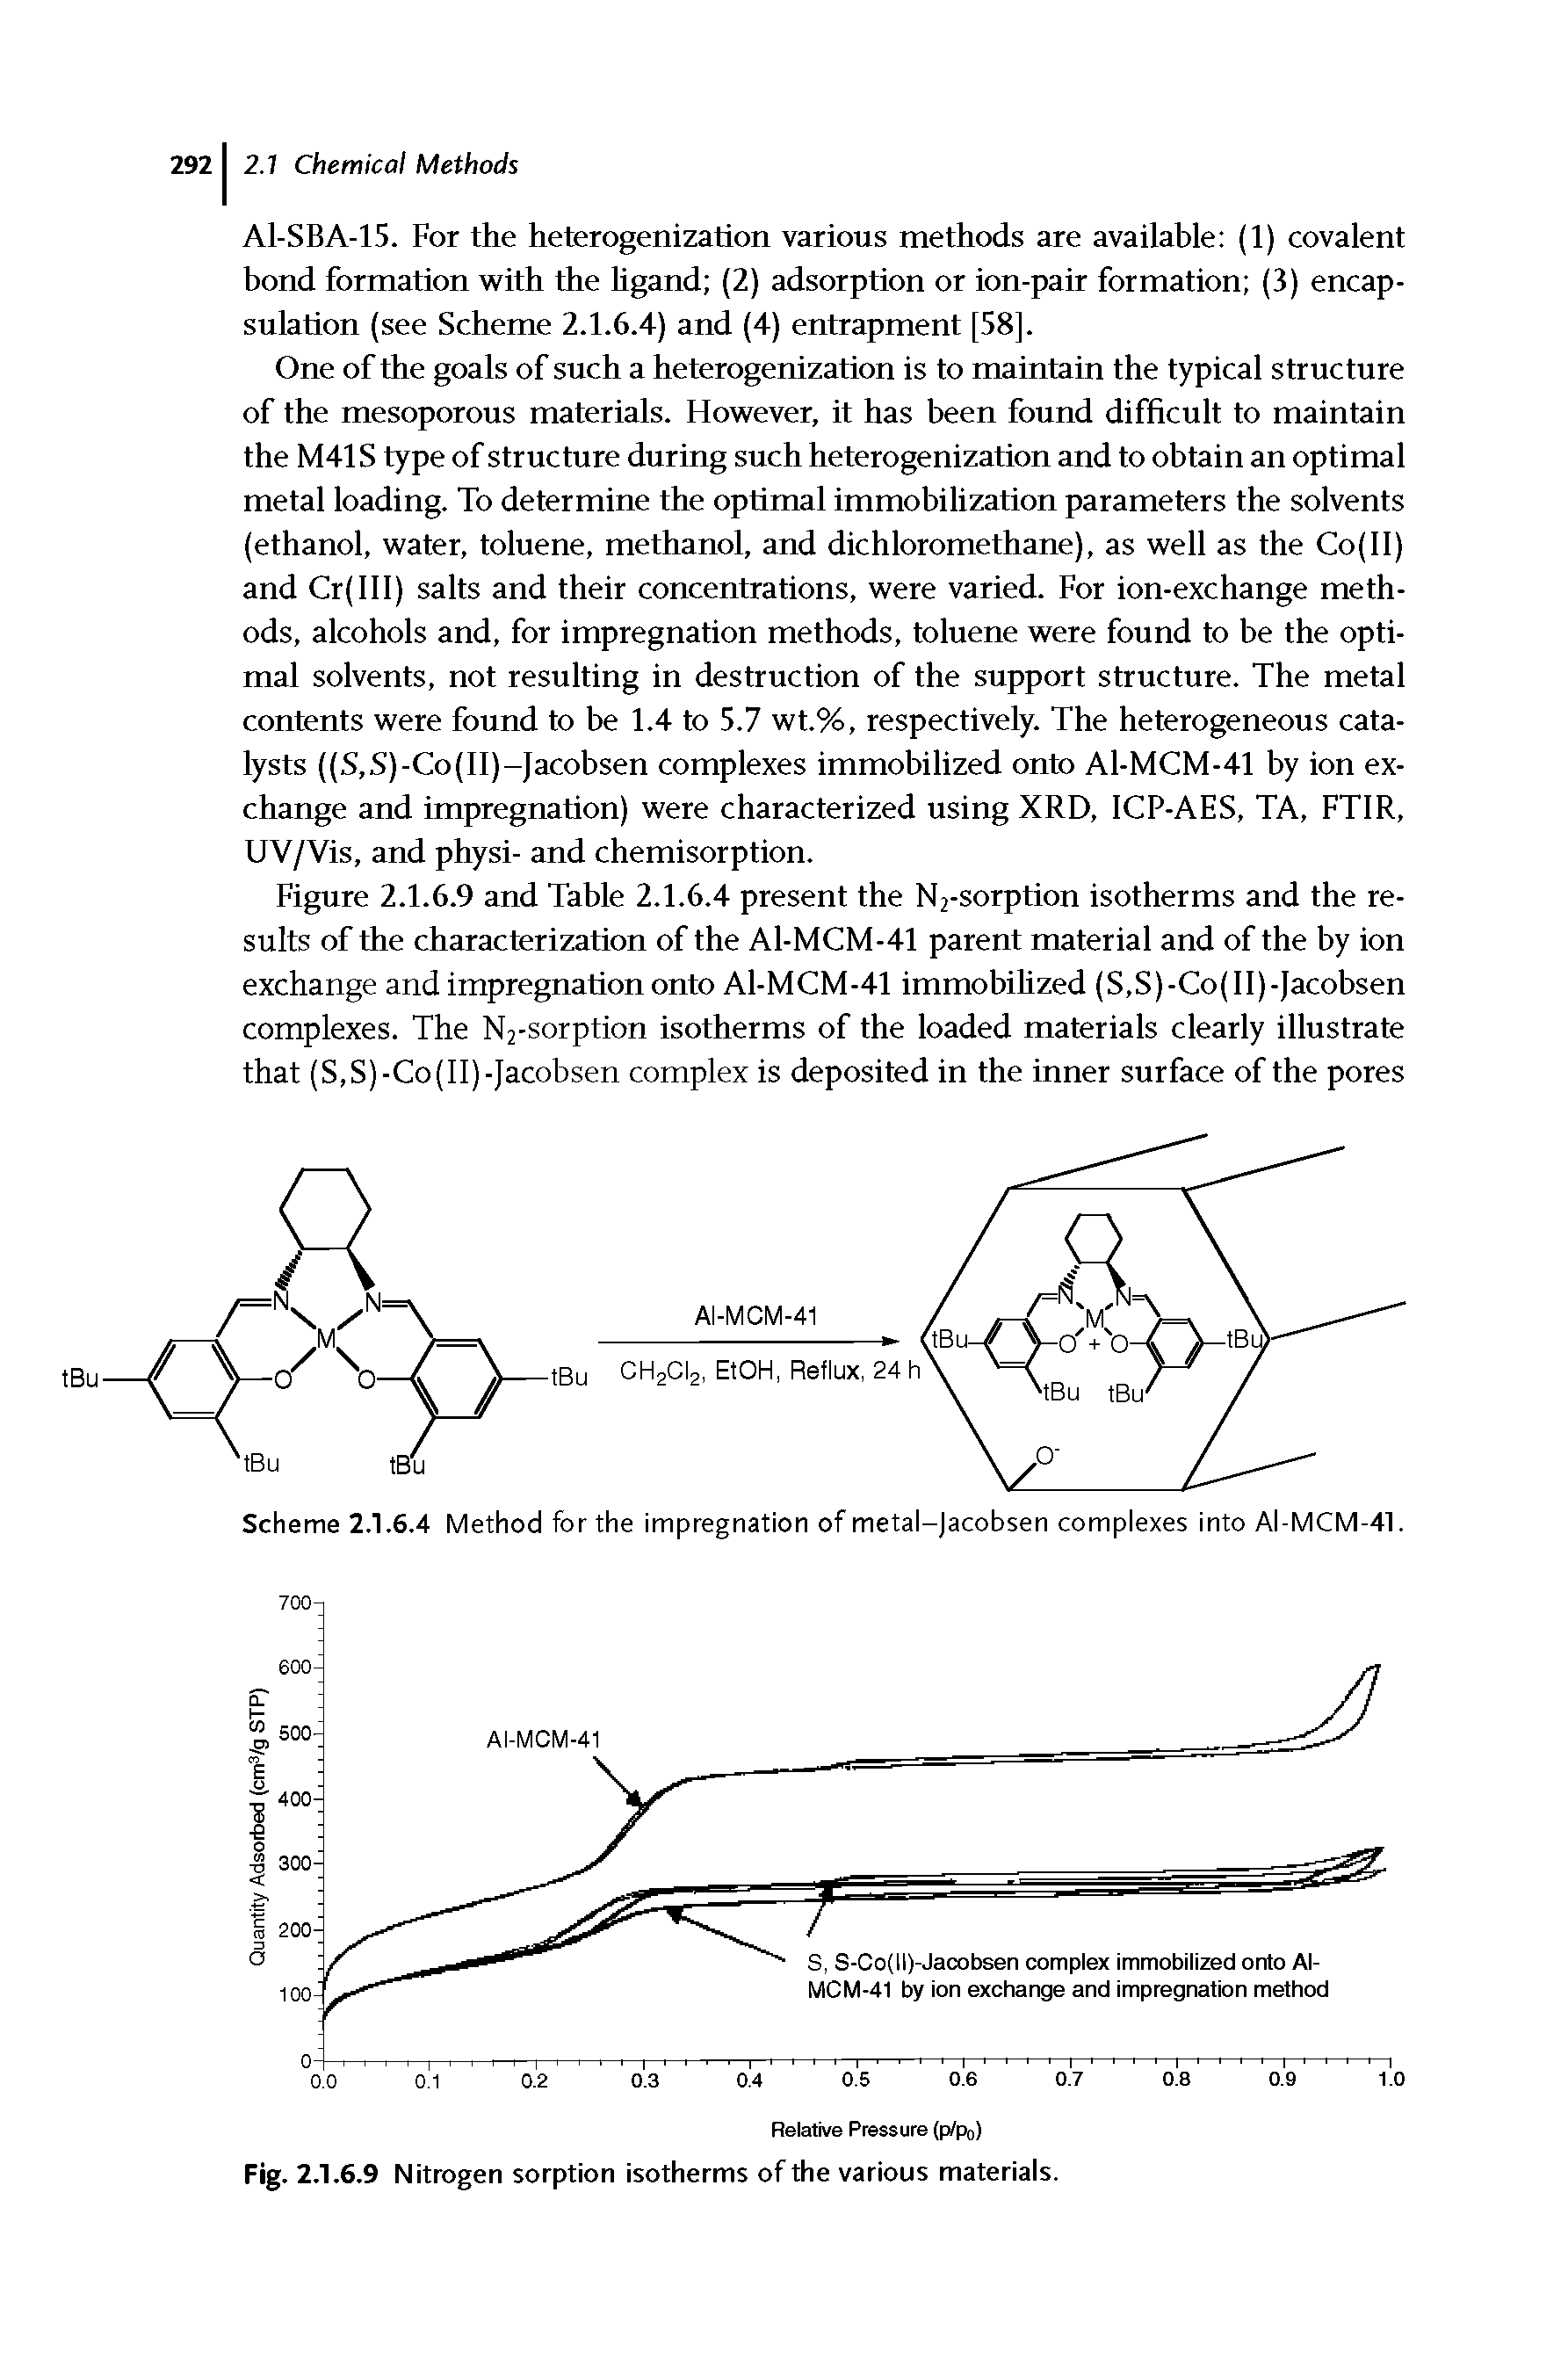 Scheme 2.1.6.4 Method for the impregnation of metal-Jacobsen complexes into Al-MCM-41.